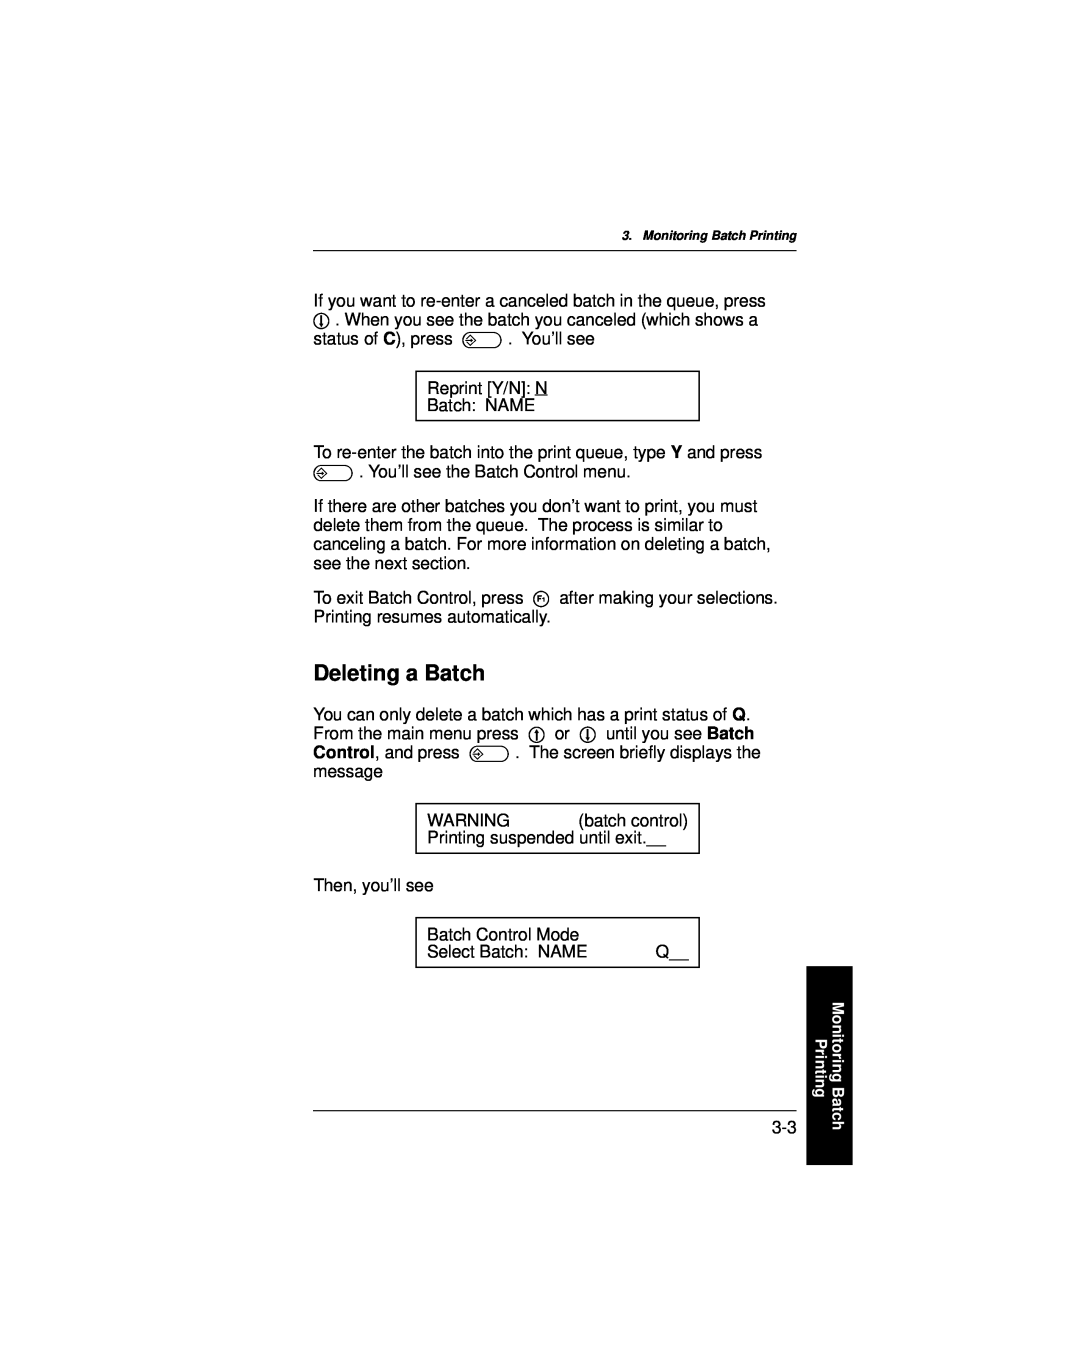 Paxar 9400 manual Deleting a Batch, Monitoring Batch Printing 